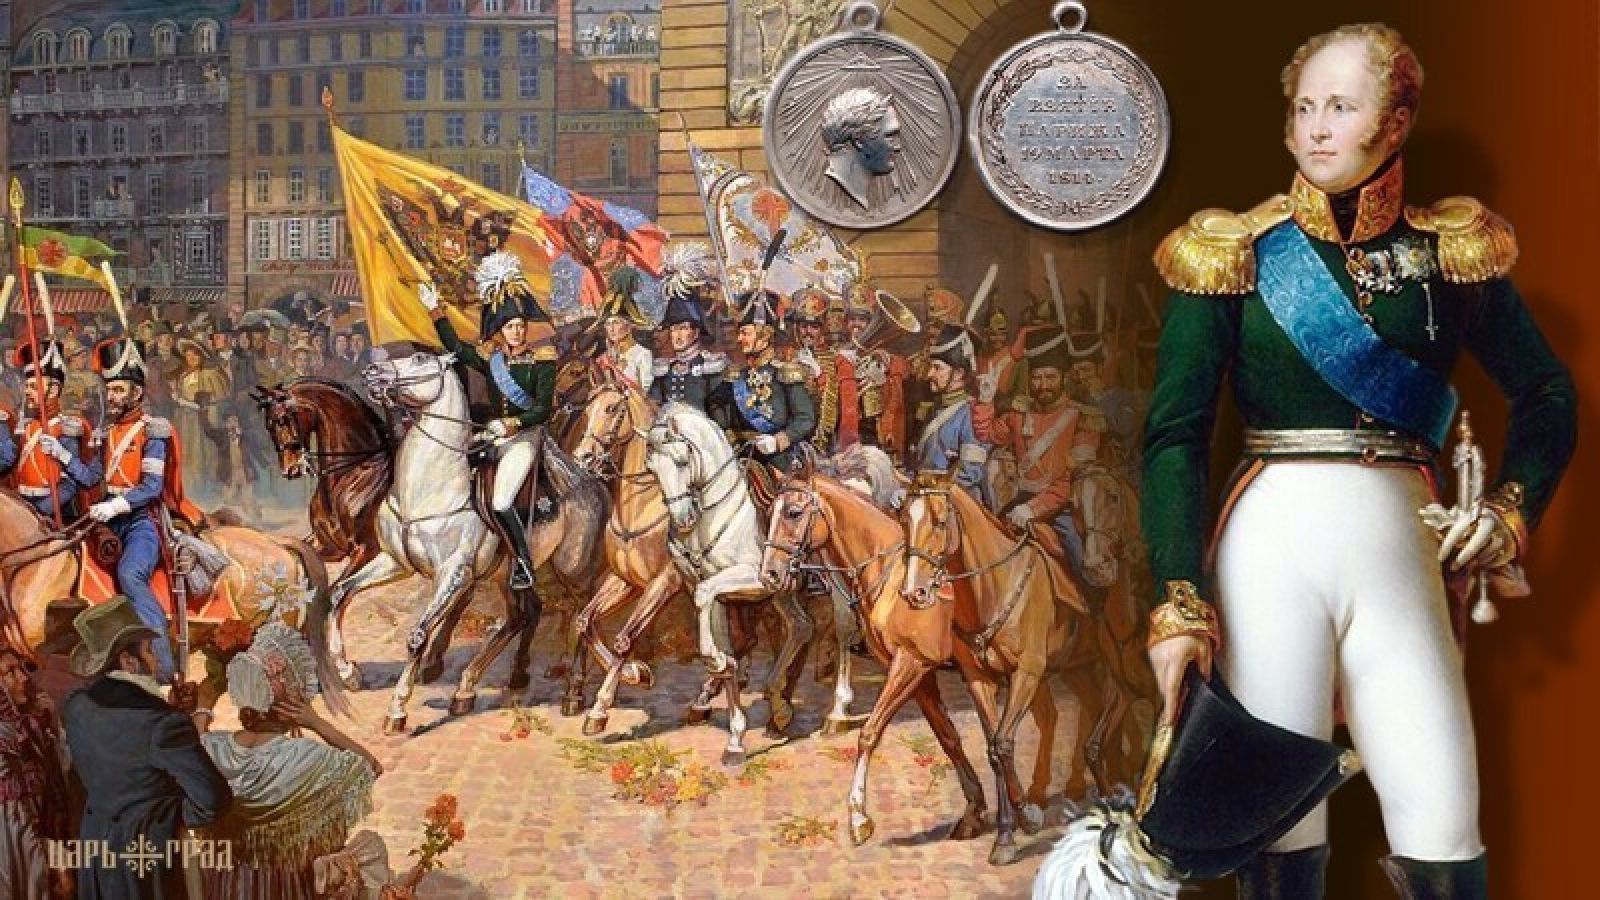 Русская армия в париже в 1814 году. Наполеон Бонапарт 1812. Взятие Парижа 1814.